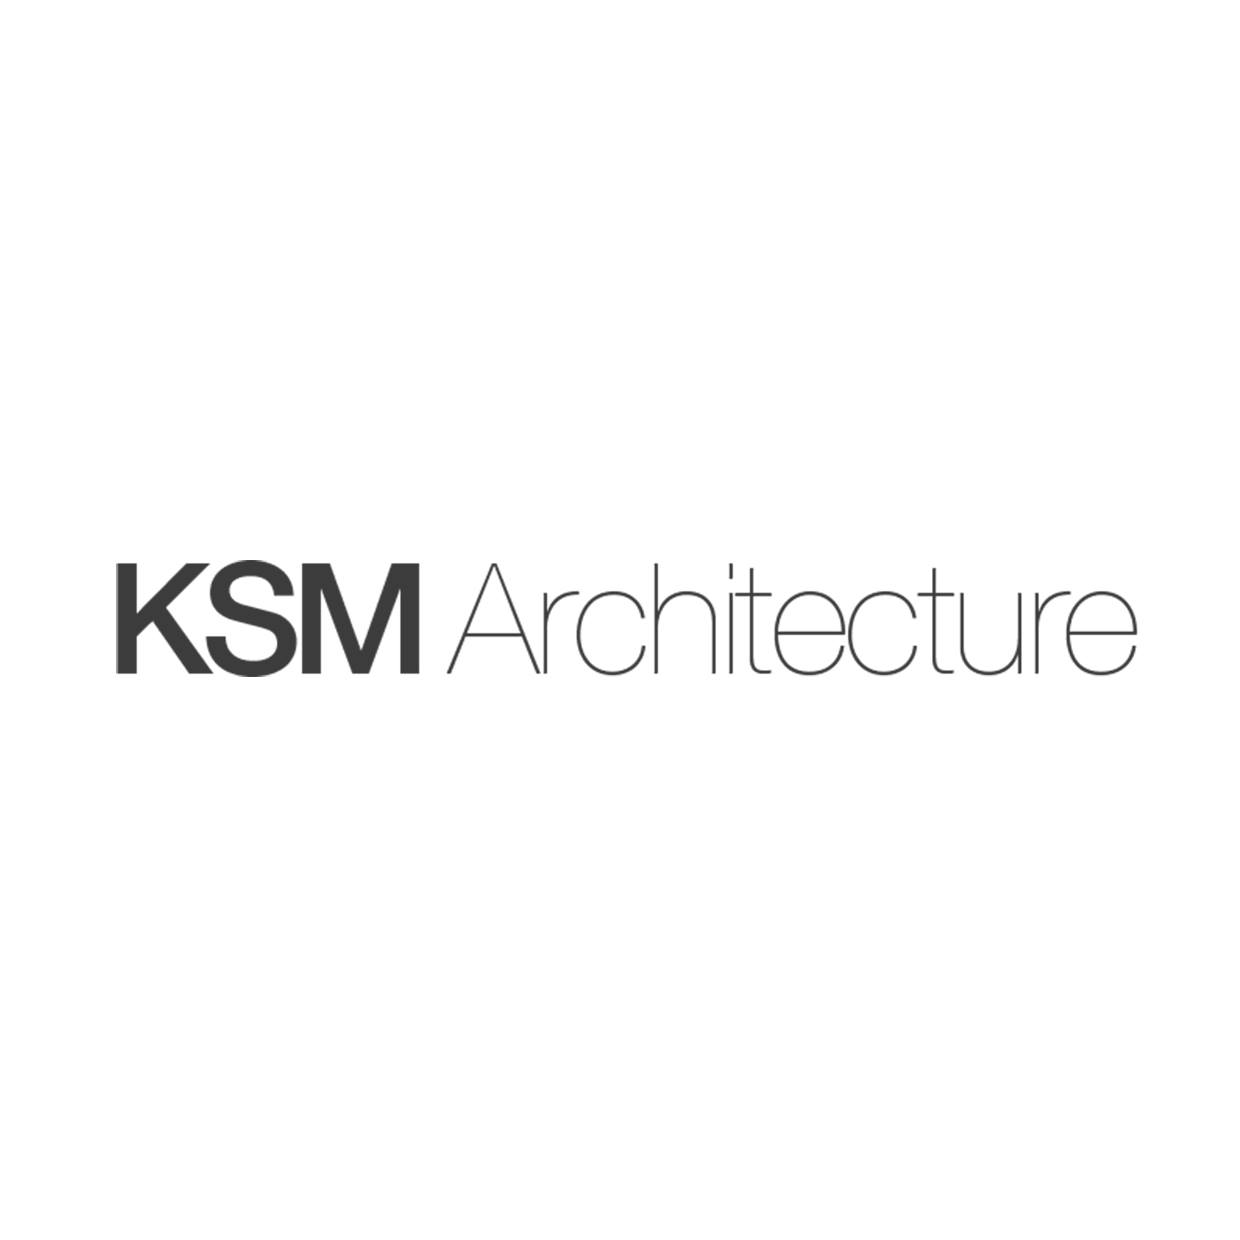 KSM Architecture|Legal Services|Professional Services